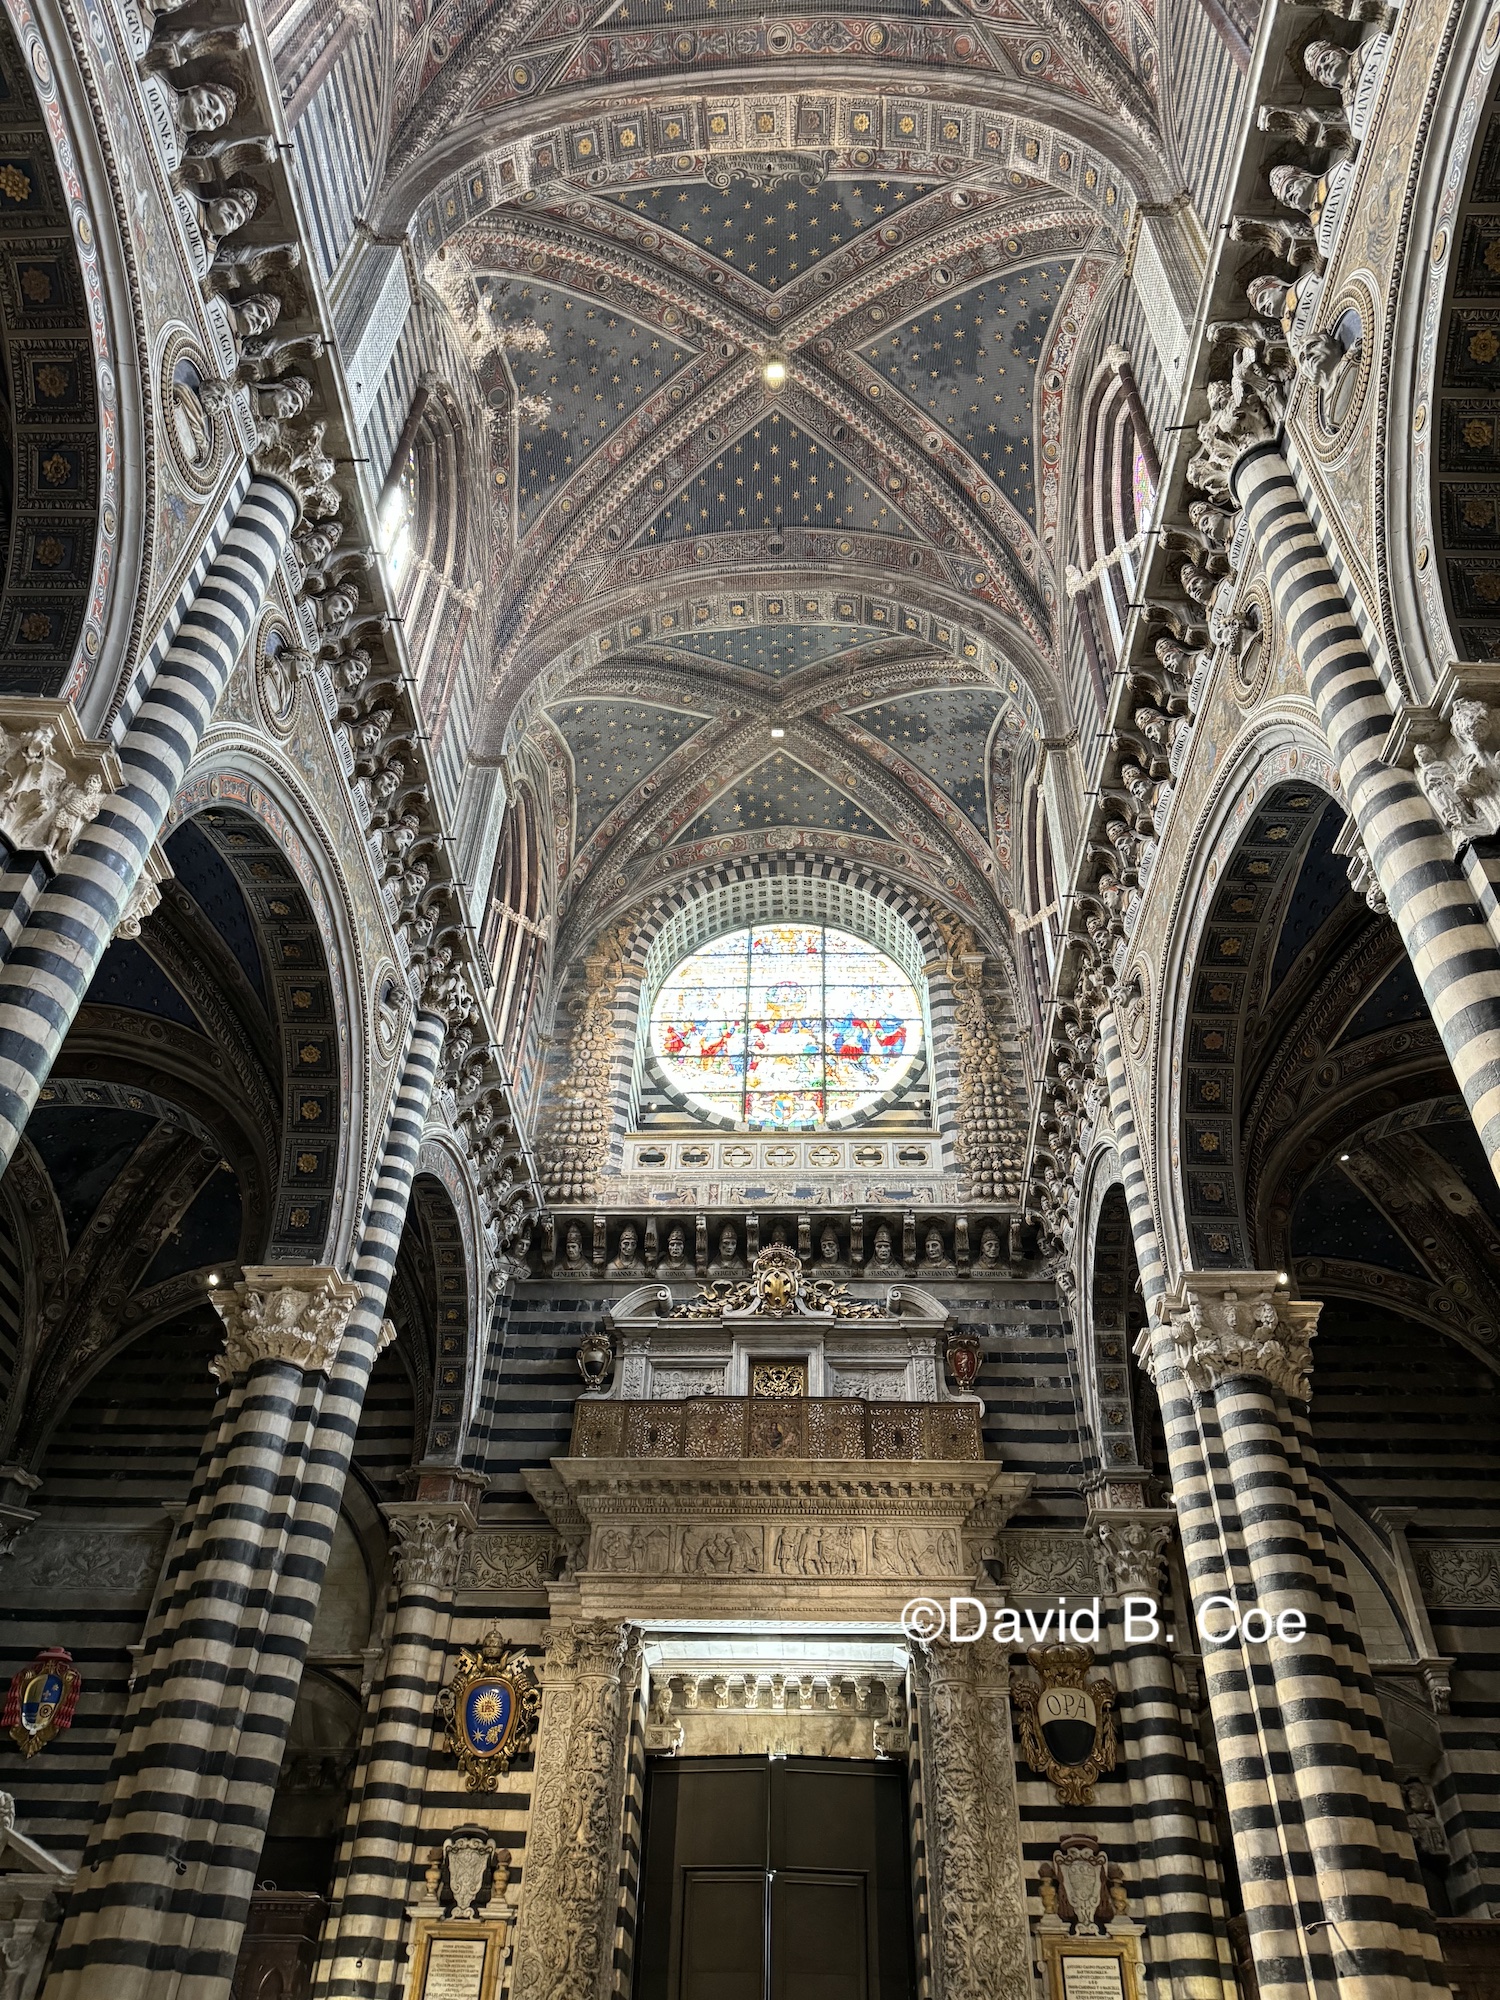 Interior of the Duomo di Siena. Photo by David B. Coe